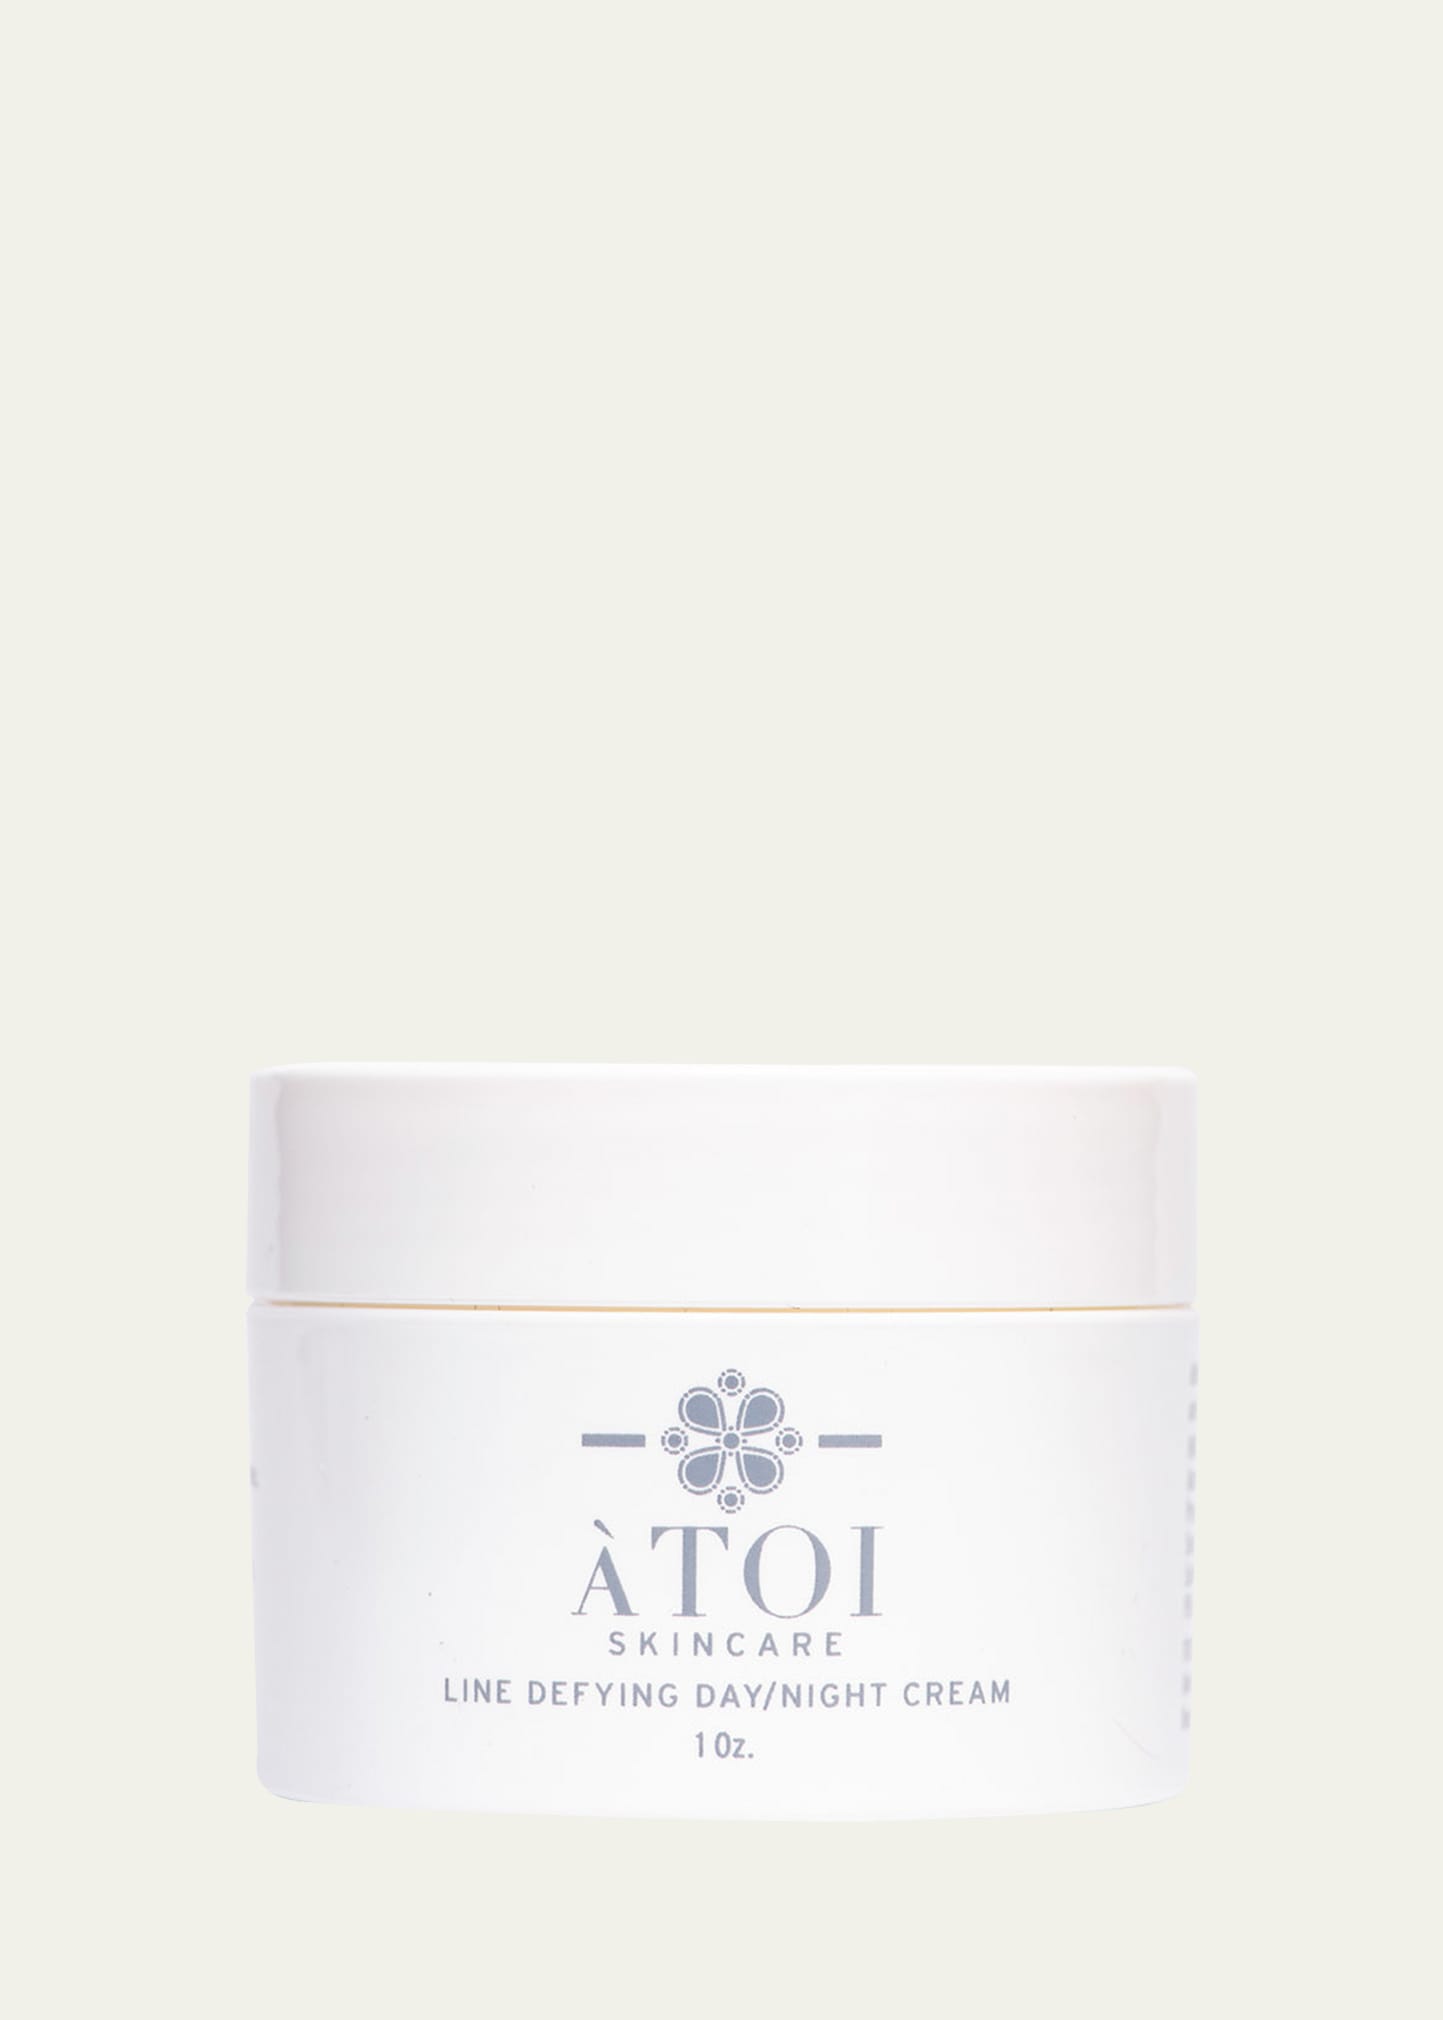 ATOI Skincare Line Defying Day/Night Cream, 1 oz.